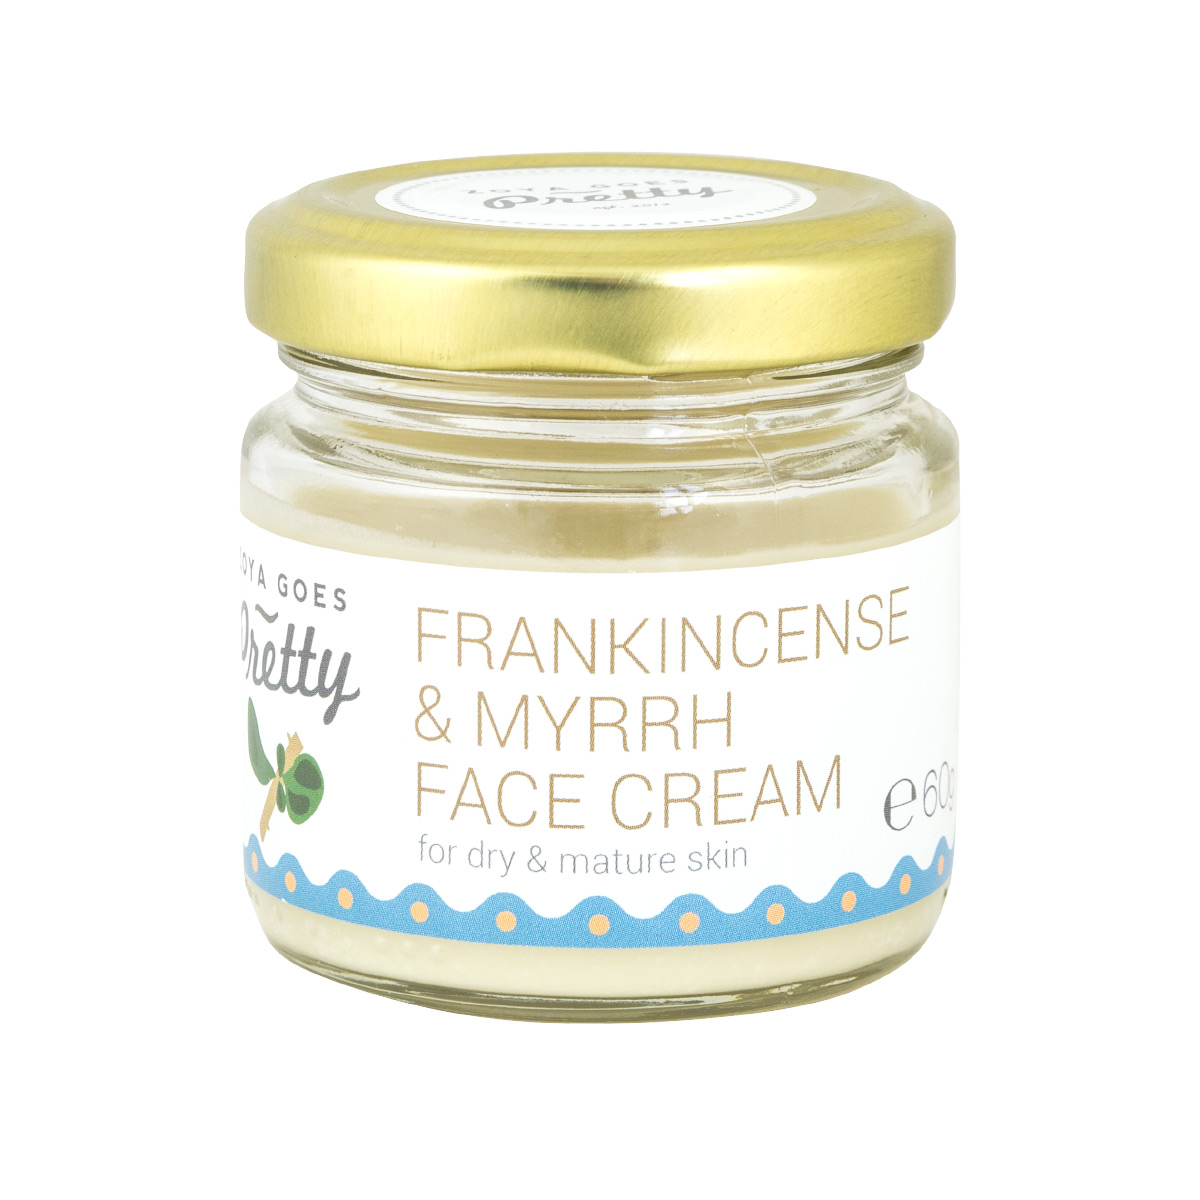 Frankincense & Myrrh Essential Oil